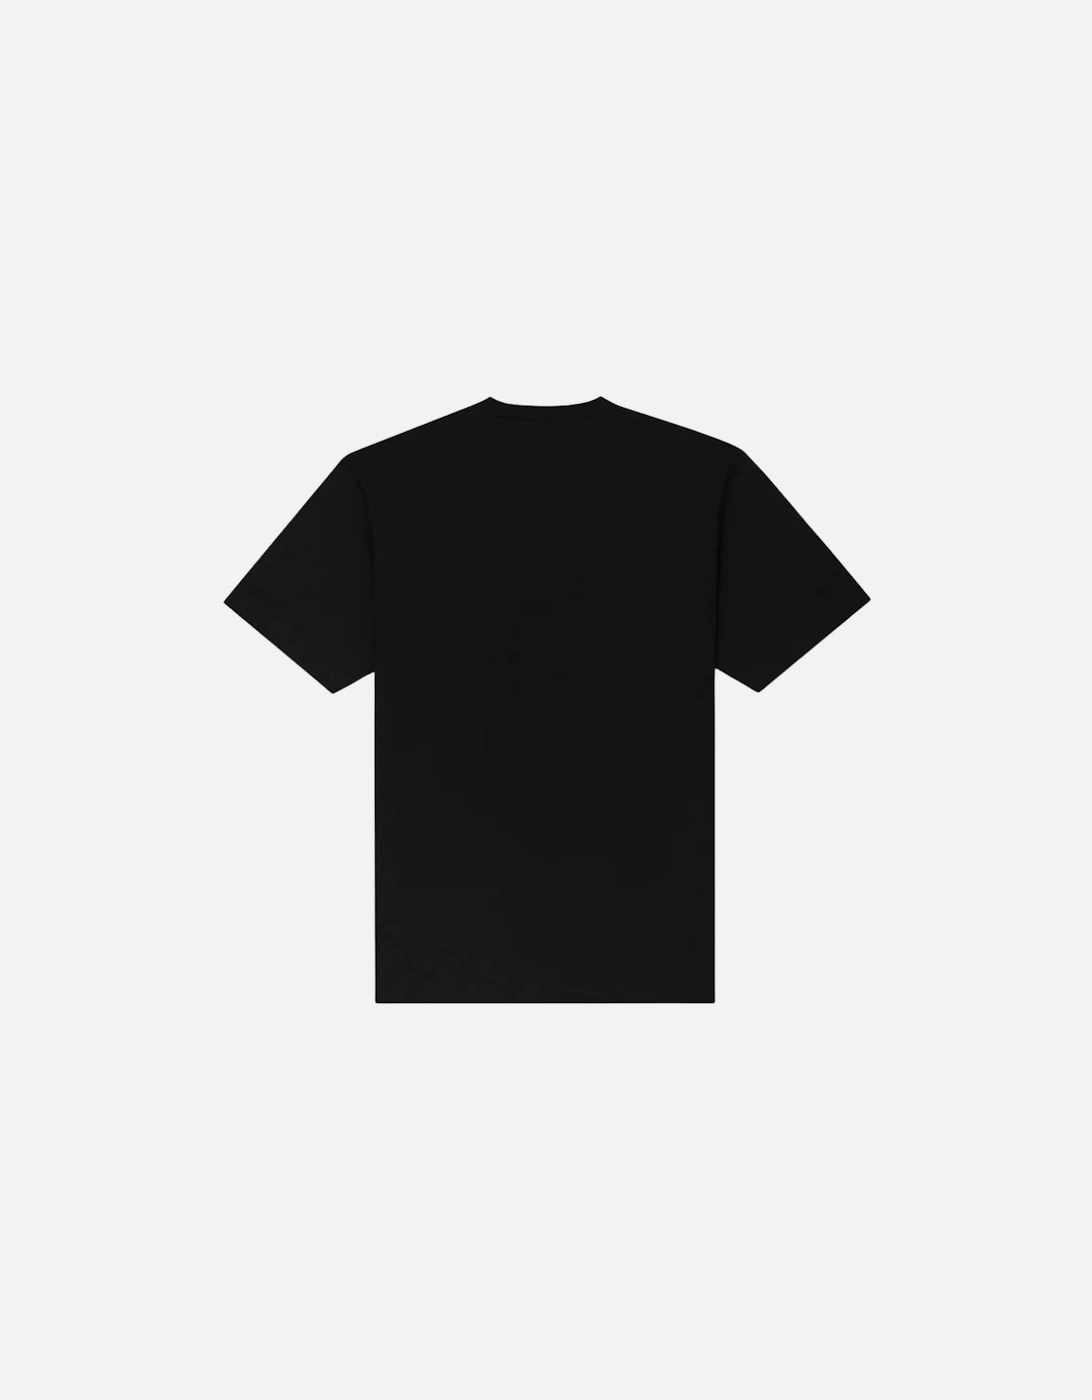 Wanstead T-Shirt - Black